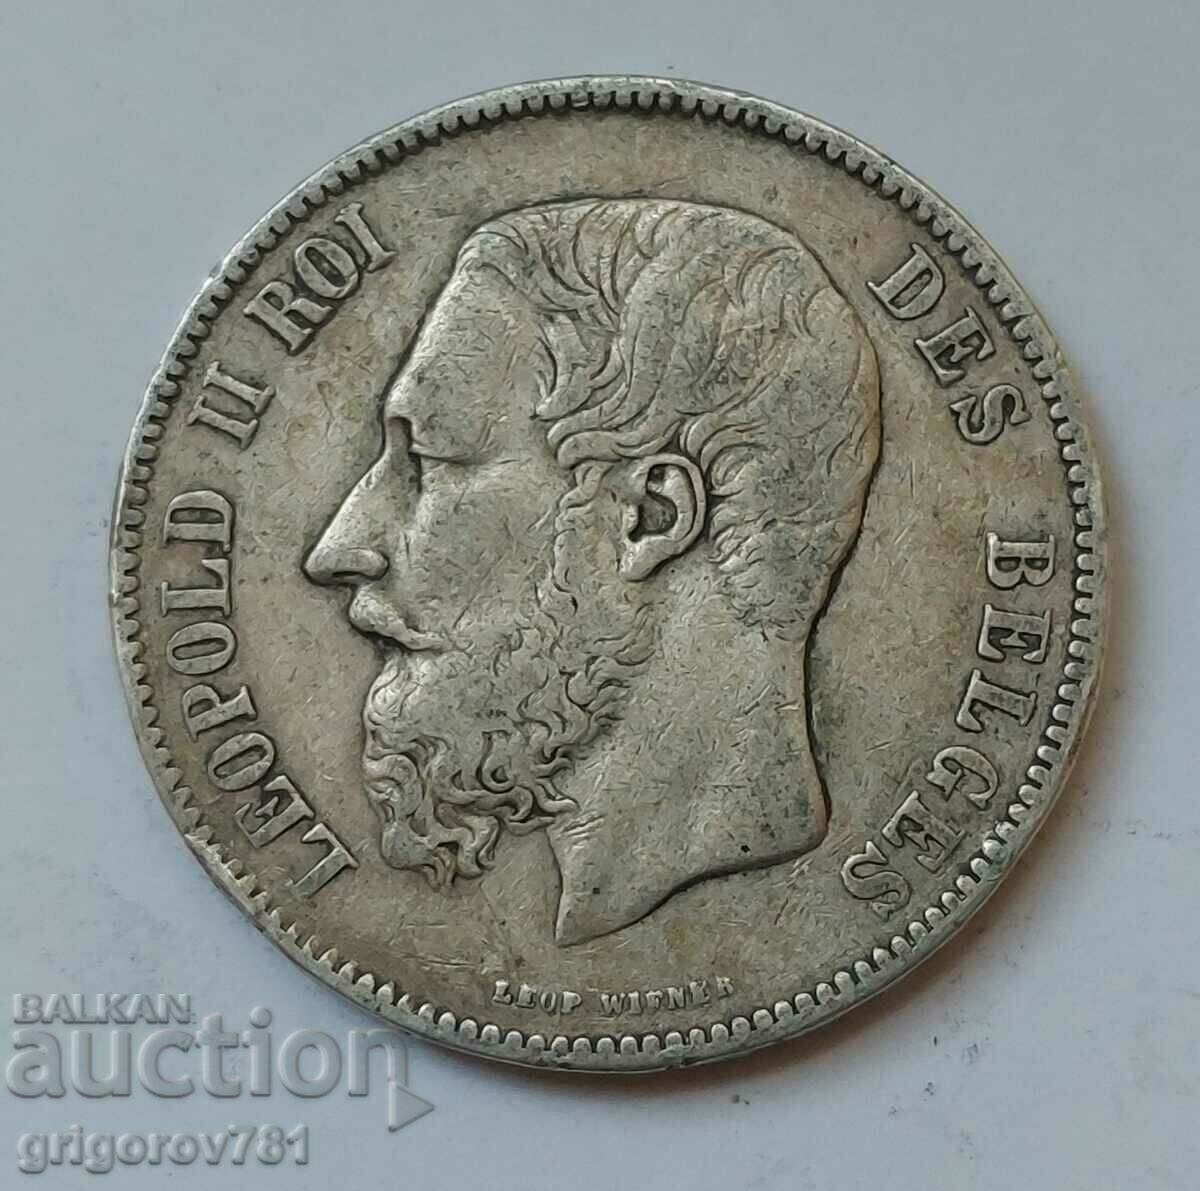 5 Franci Argint Belgia 1873 - Moneda de argint #228